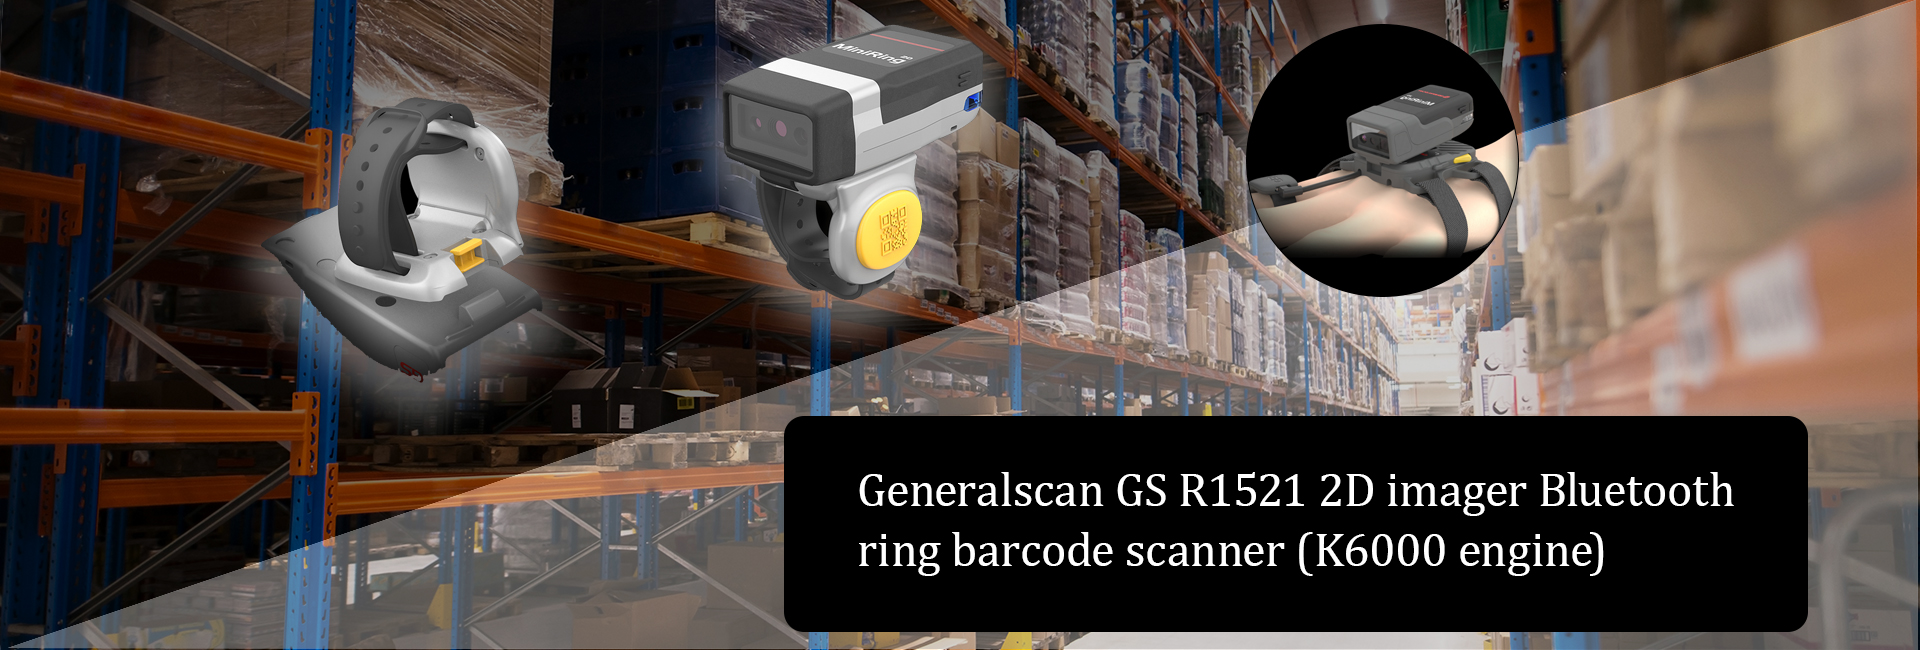 Generalscan GS R1521 2D imager Bluetooth  ring barcode scanner (K6000 engine)